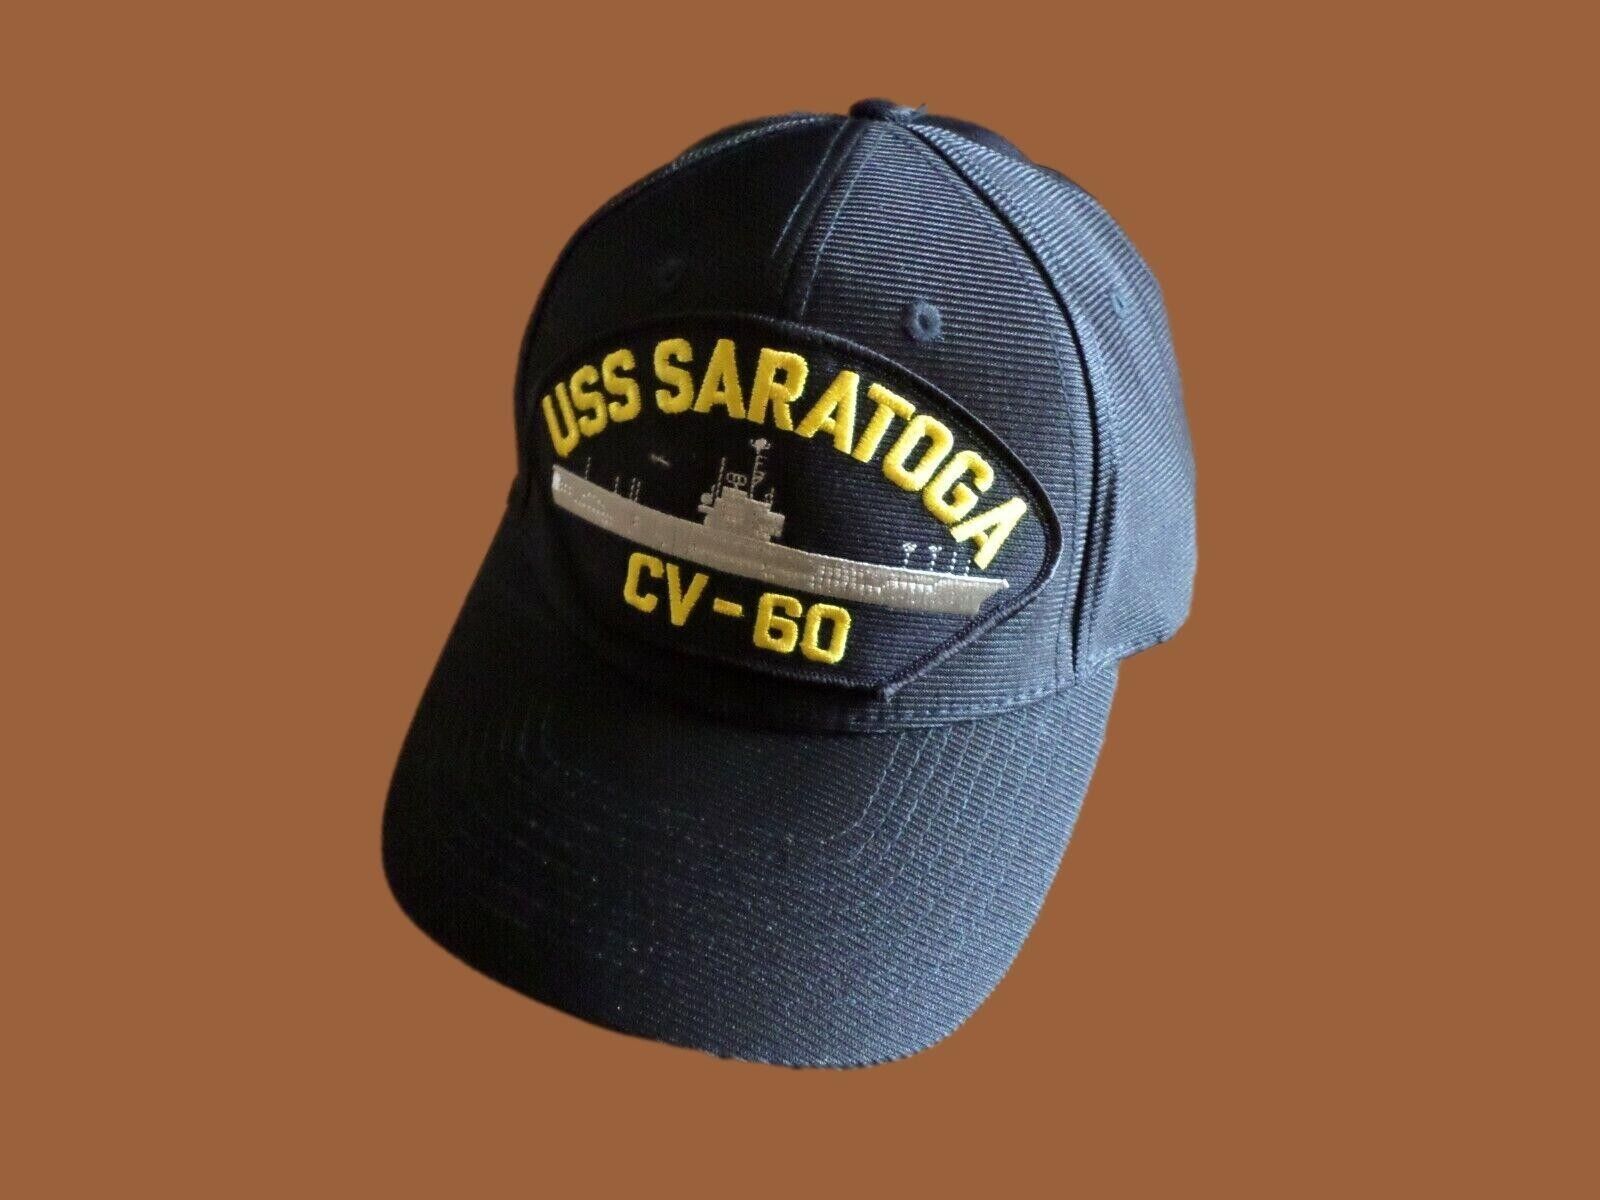  USS SARATOGA CV-60 U.S NAVY SHIP HAT OFFICIAL U.S MILITARY BALL CAP U.S.A MADE